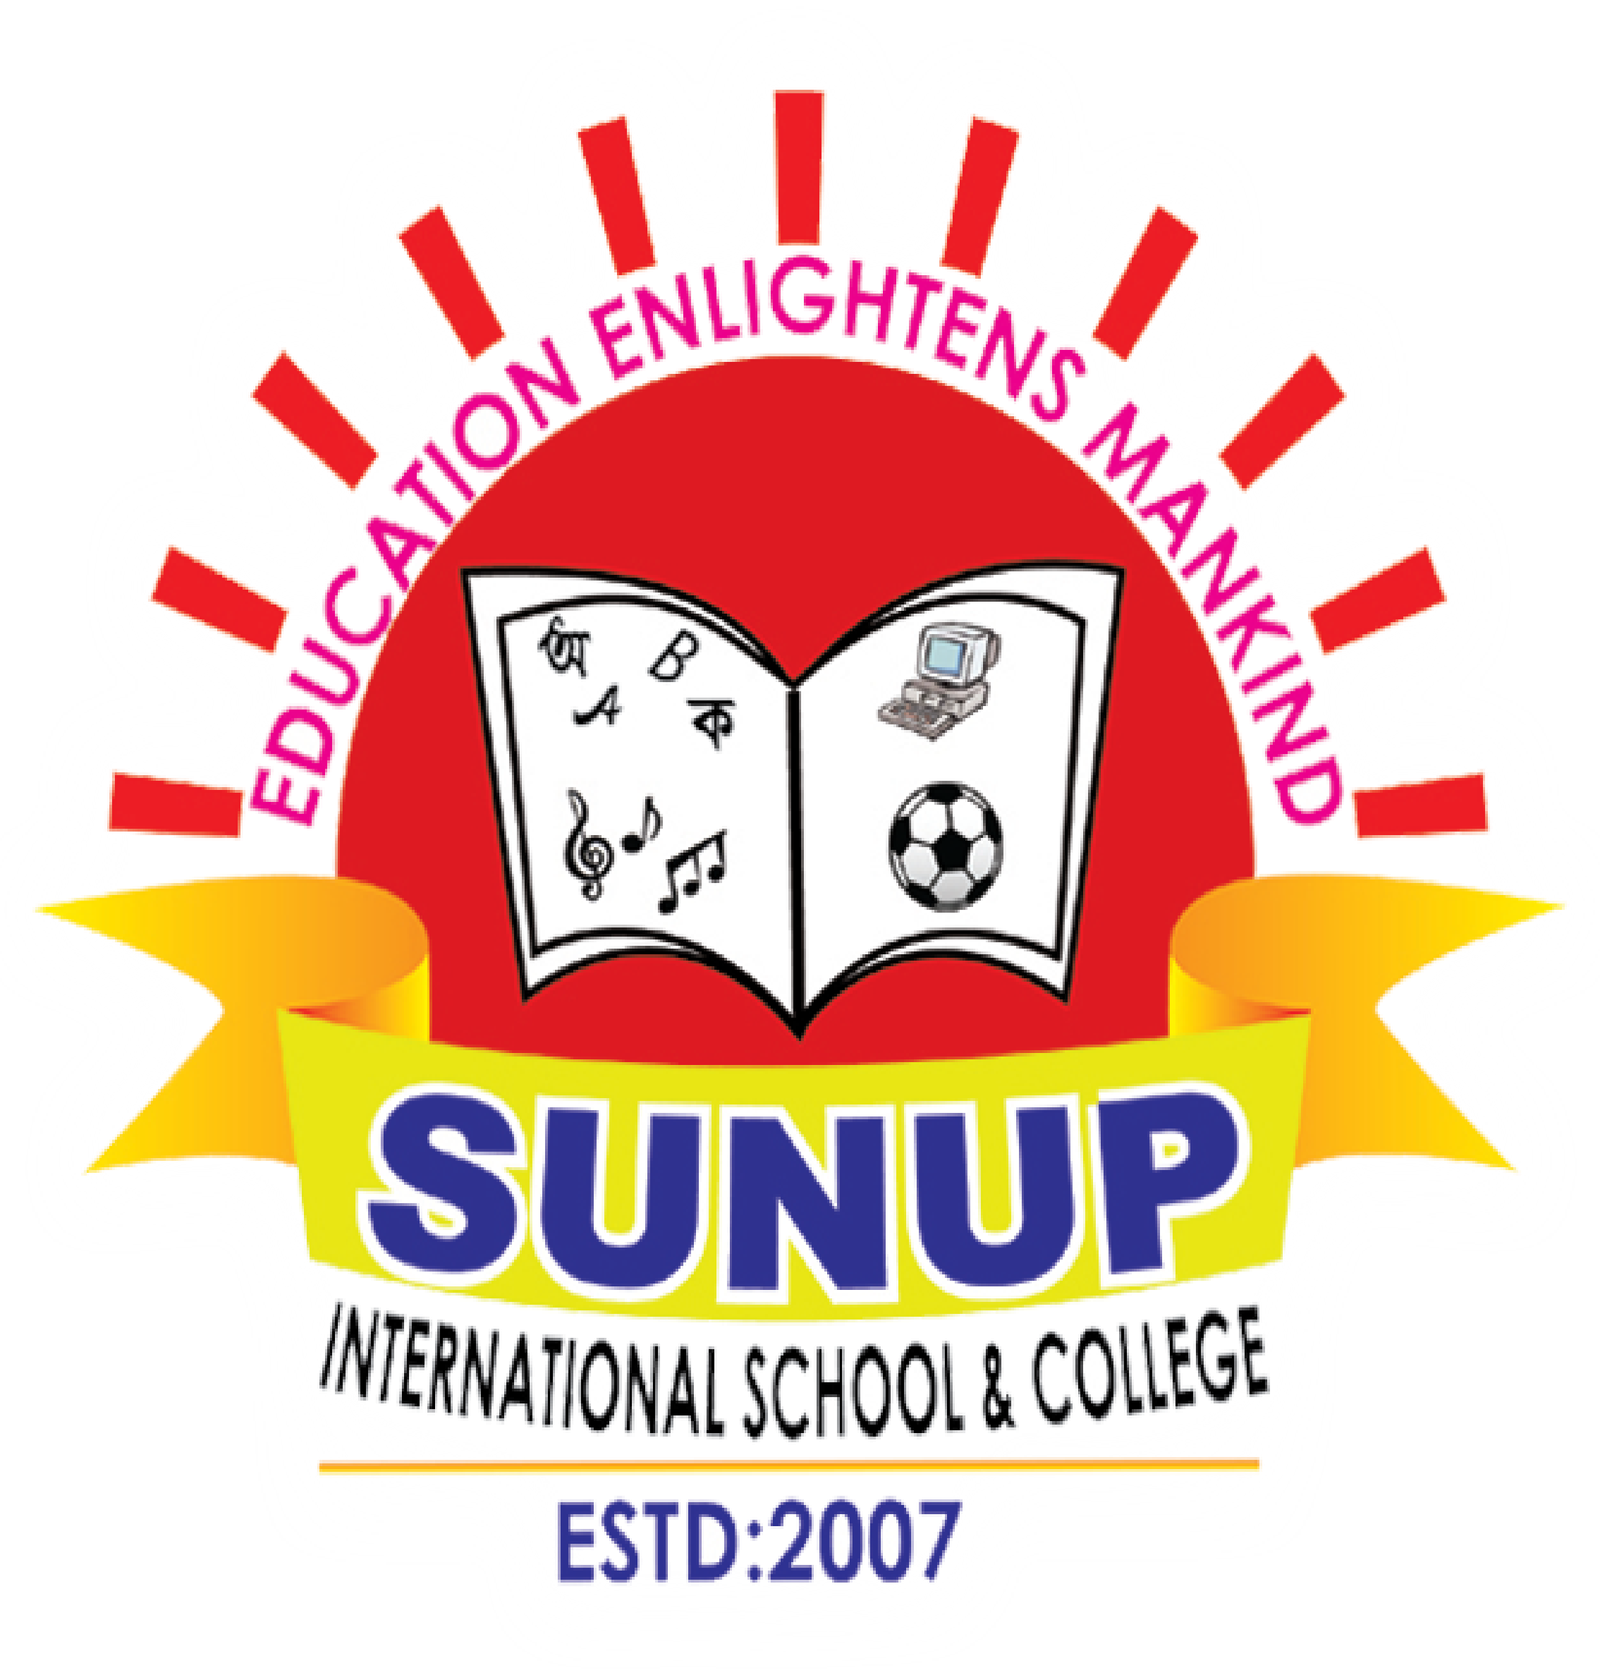 SunUp International School & College